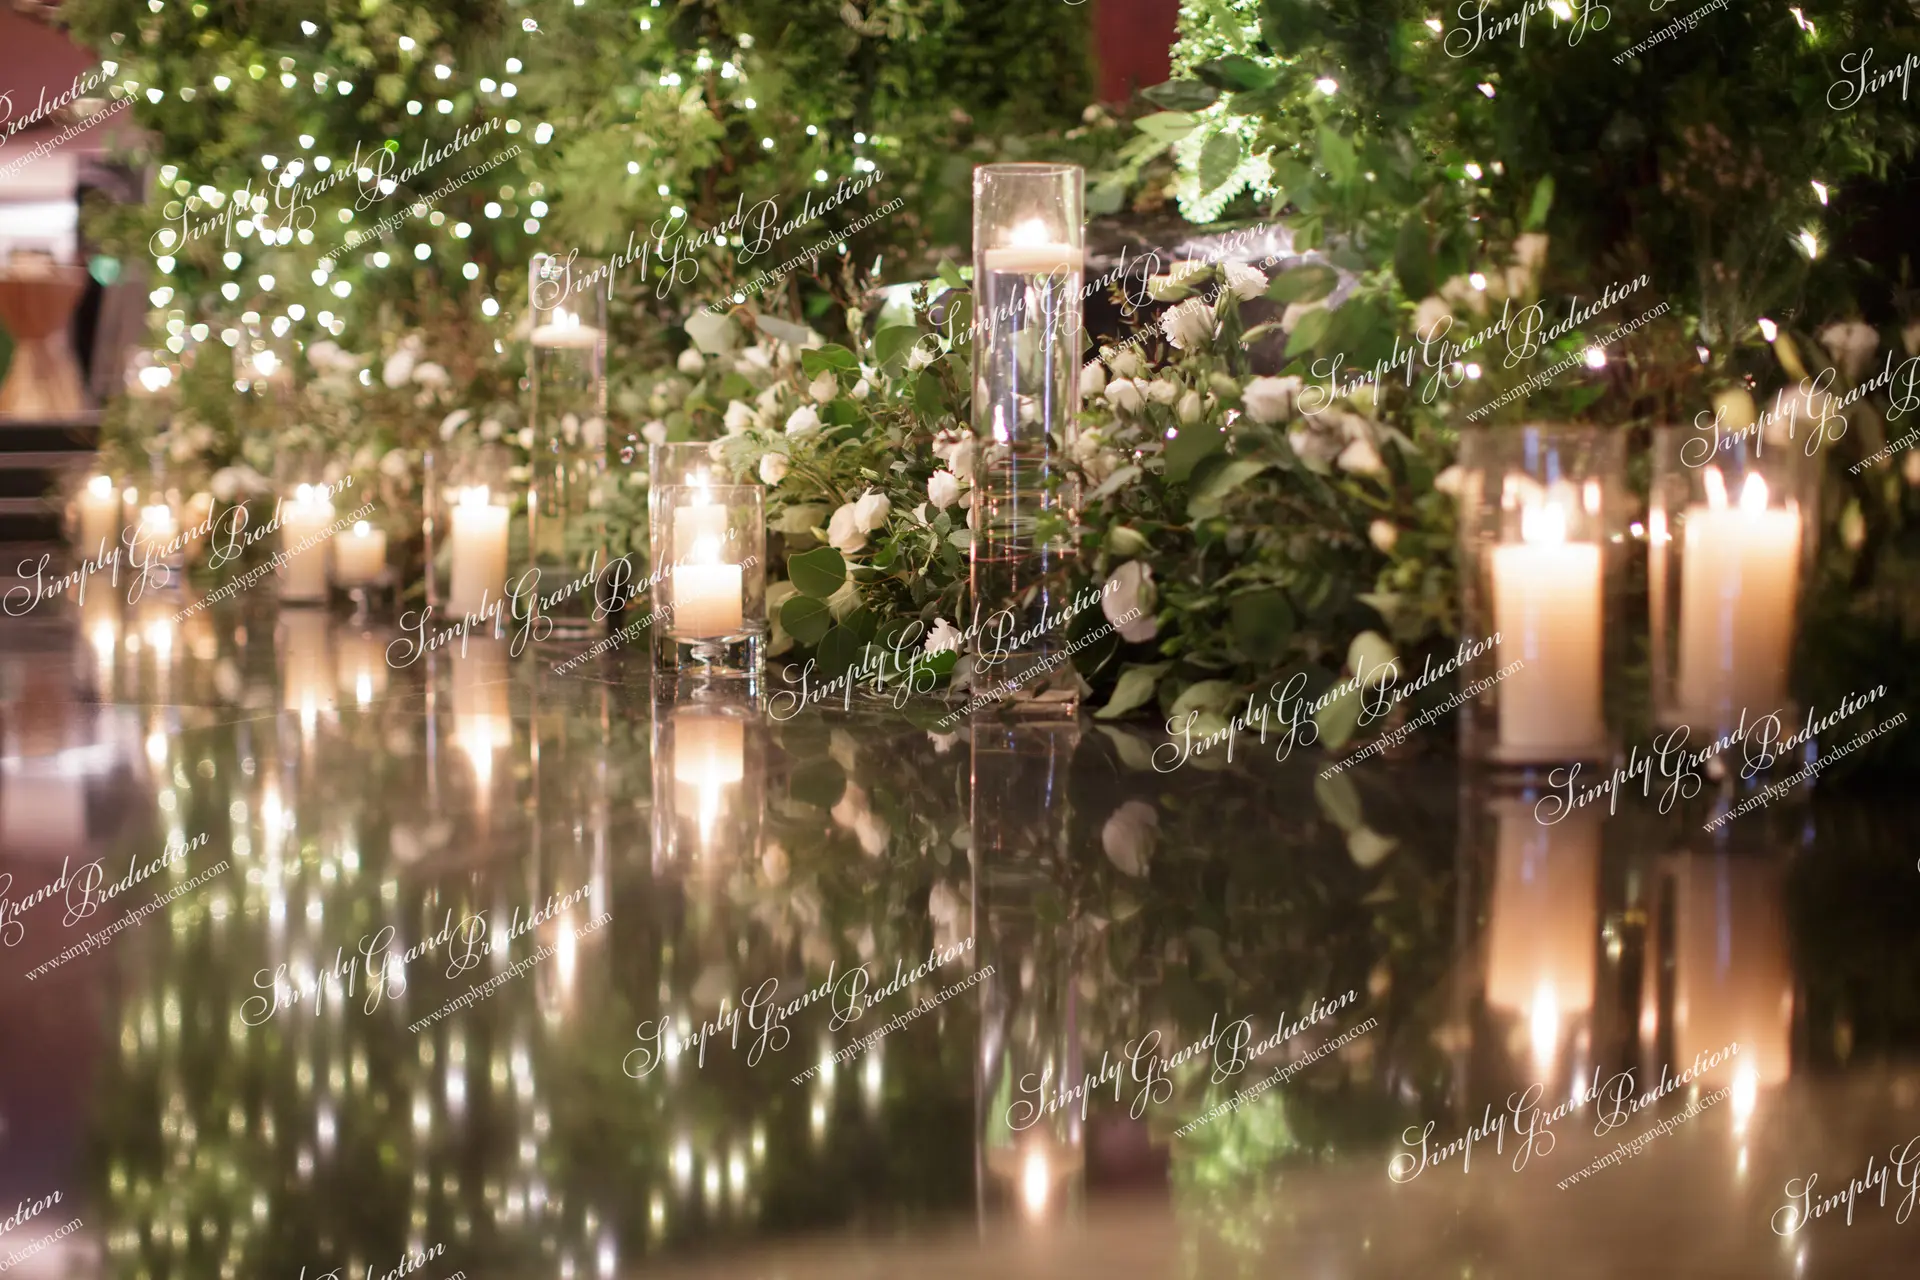 Simply_Grand_Production_Ballroom_wedding_decoration_entrance_candle_floating_weddinginspo_Grand_Hyatt_2_6_wm